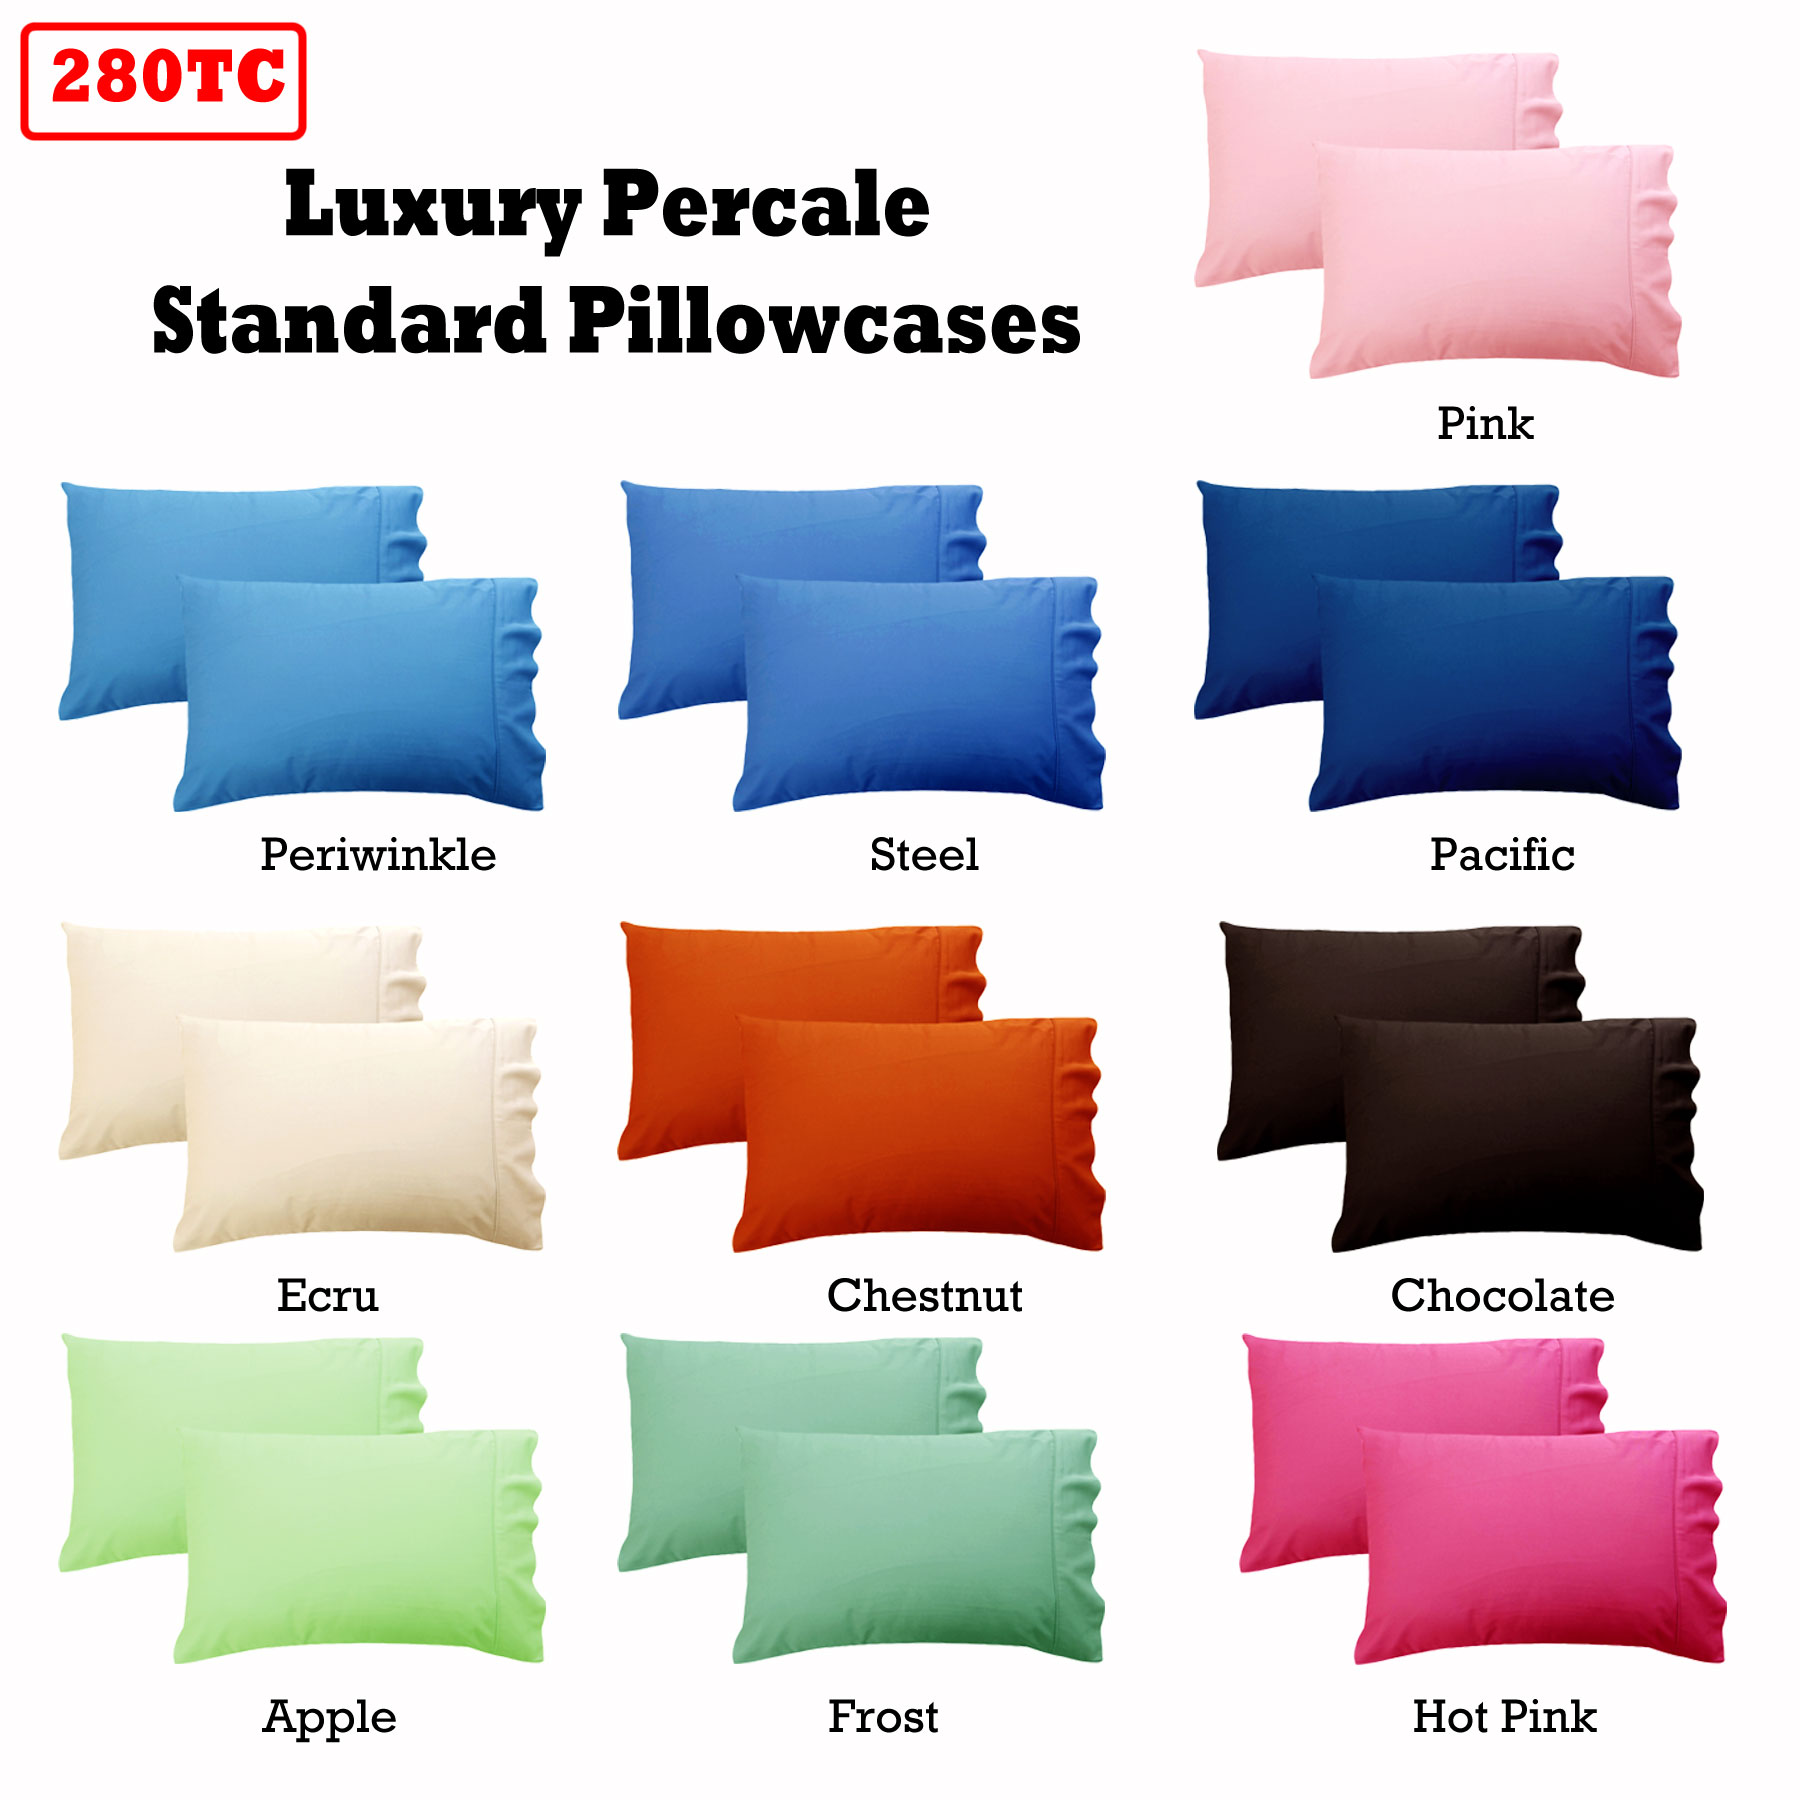 Pair of 280TC Luxury Percale Standard Pillowcases 48 x 73cm